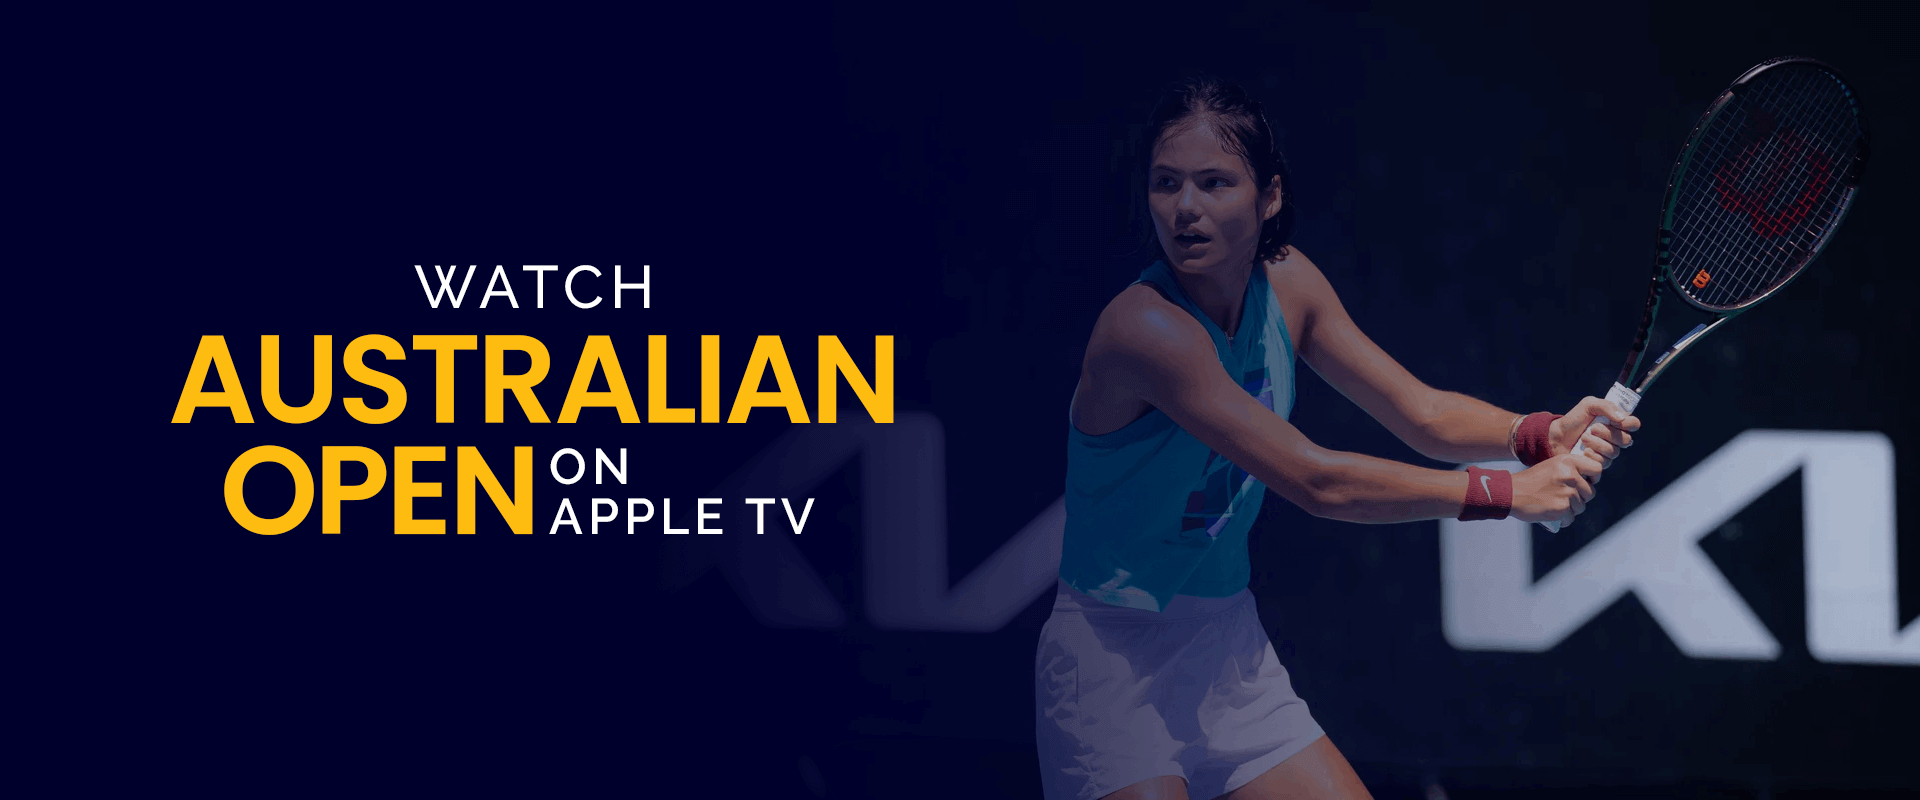 How to Watch Australian Open on Apple TV